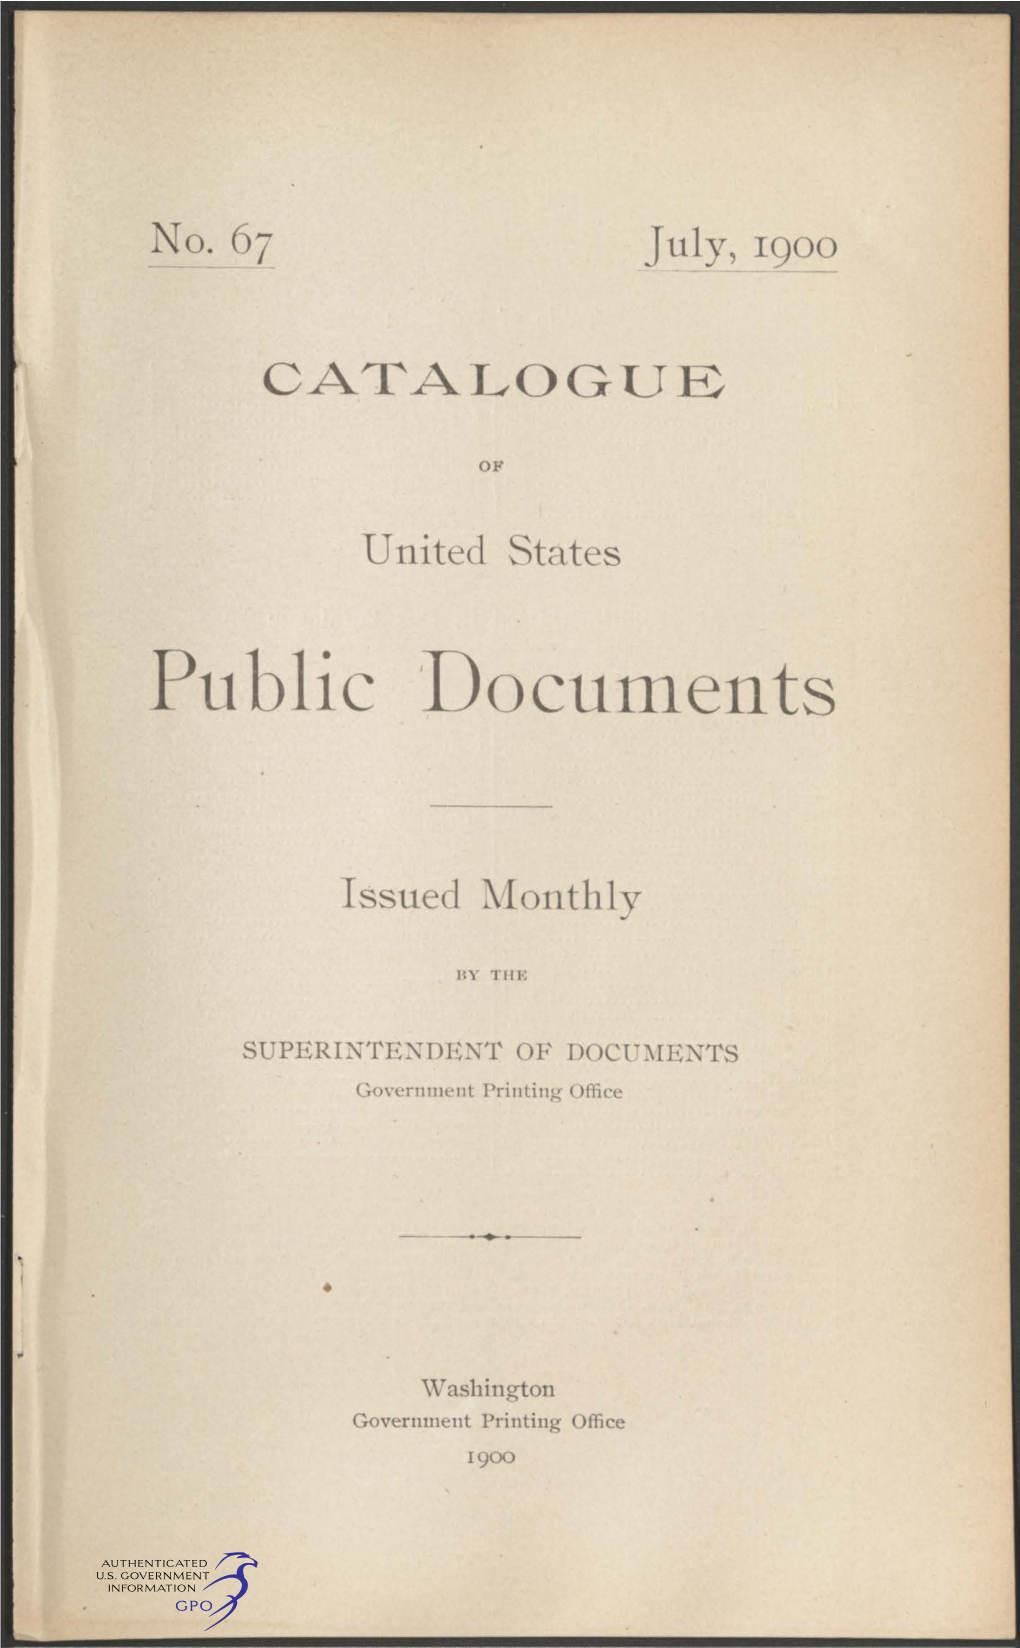 Catalogue of United States Public Documents /July, 1900